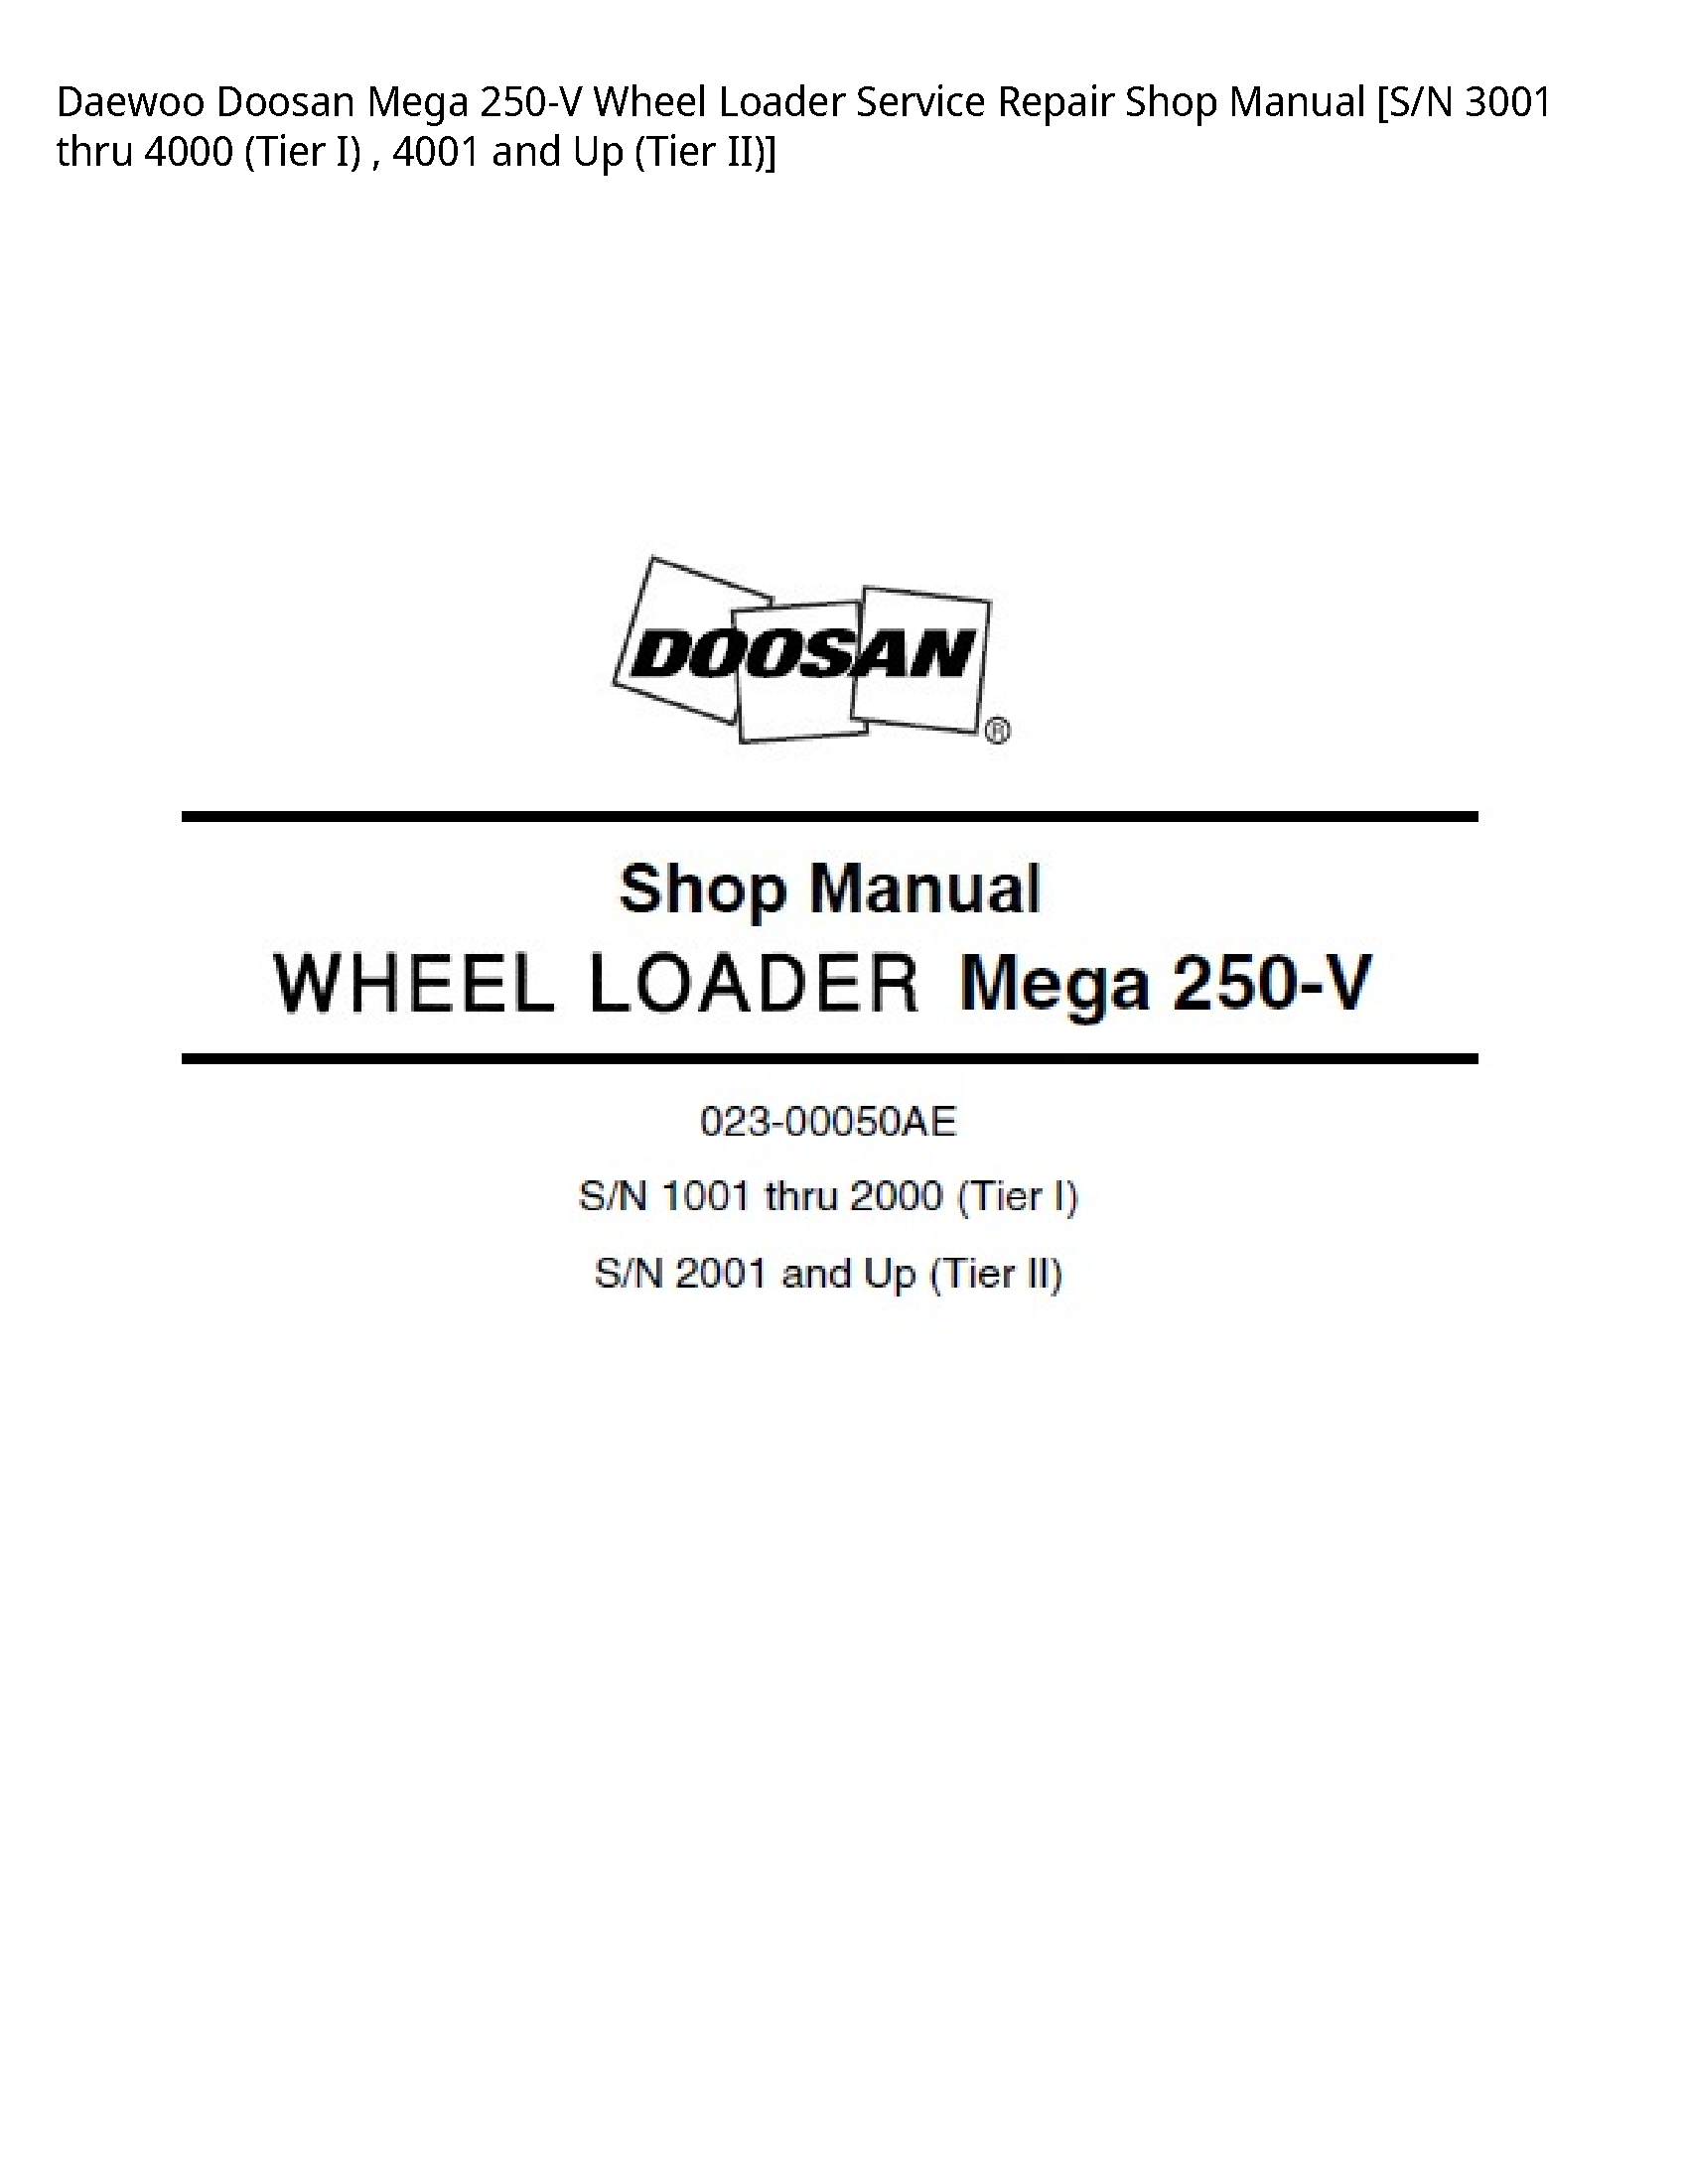 Daewoo Doosan 250-V Mega Wheel Loader manual